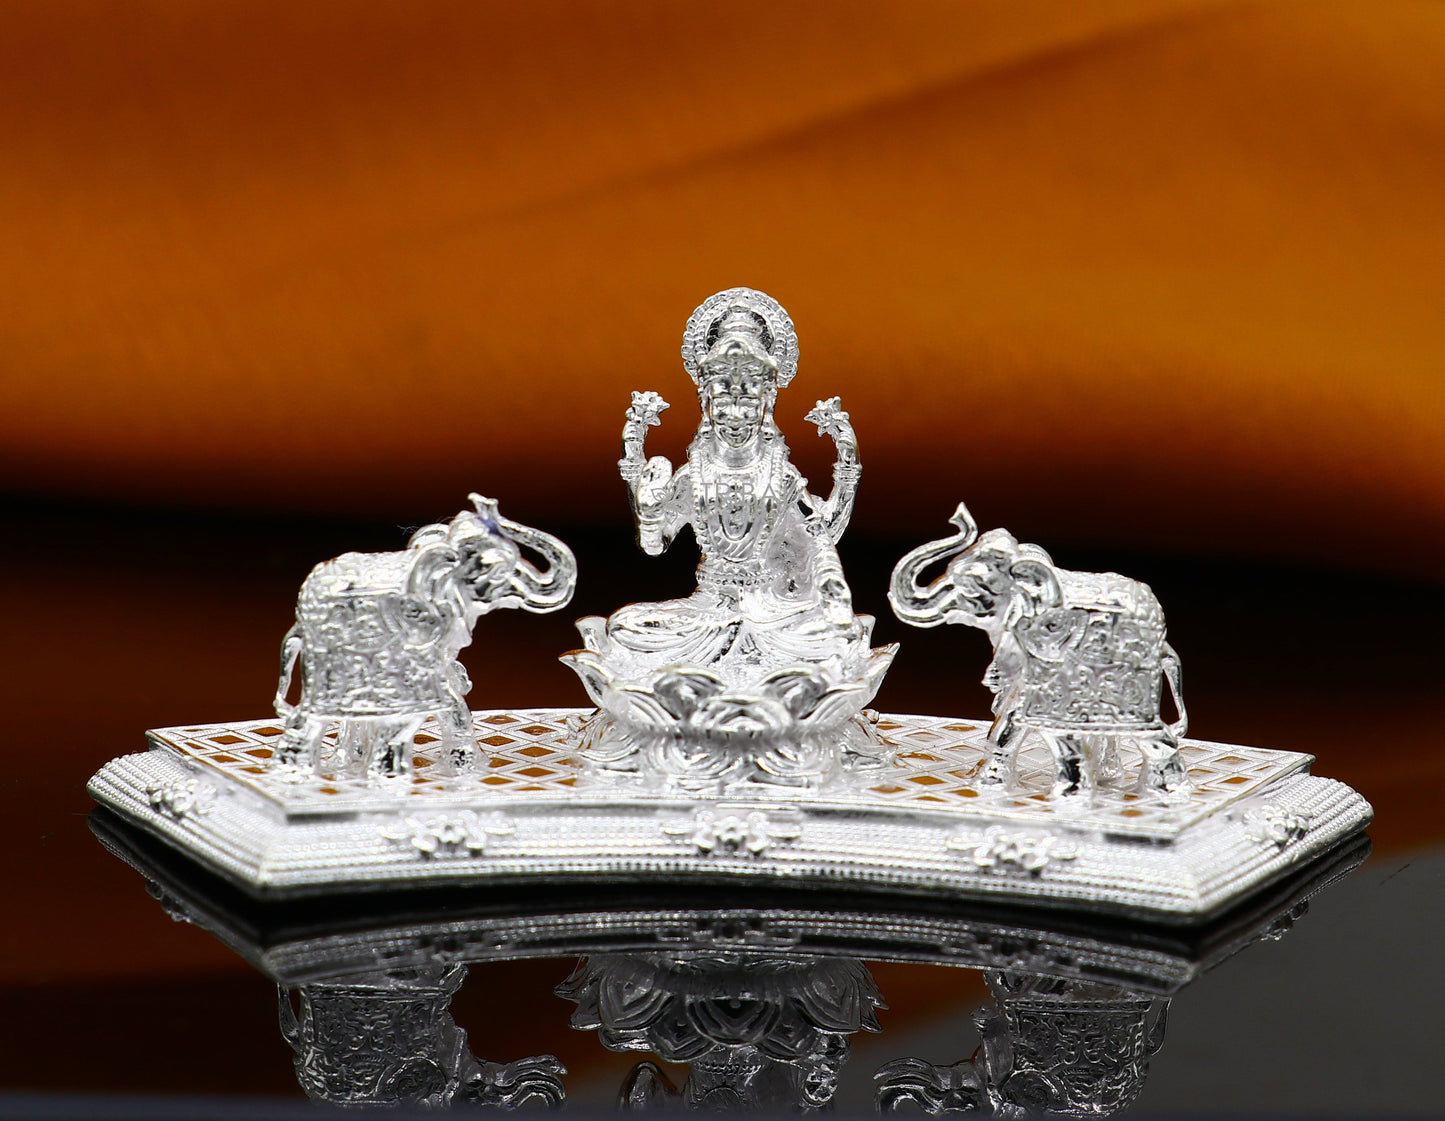 925 Sterling silver handmade Indian Idols Goddess Laxmi with elephant Statue figurine, puja articles Diwali puja gift art626 - TRIBAL ORNAMENTS